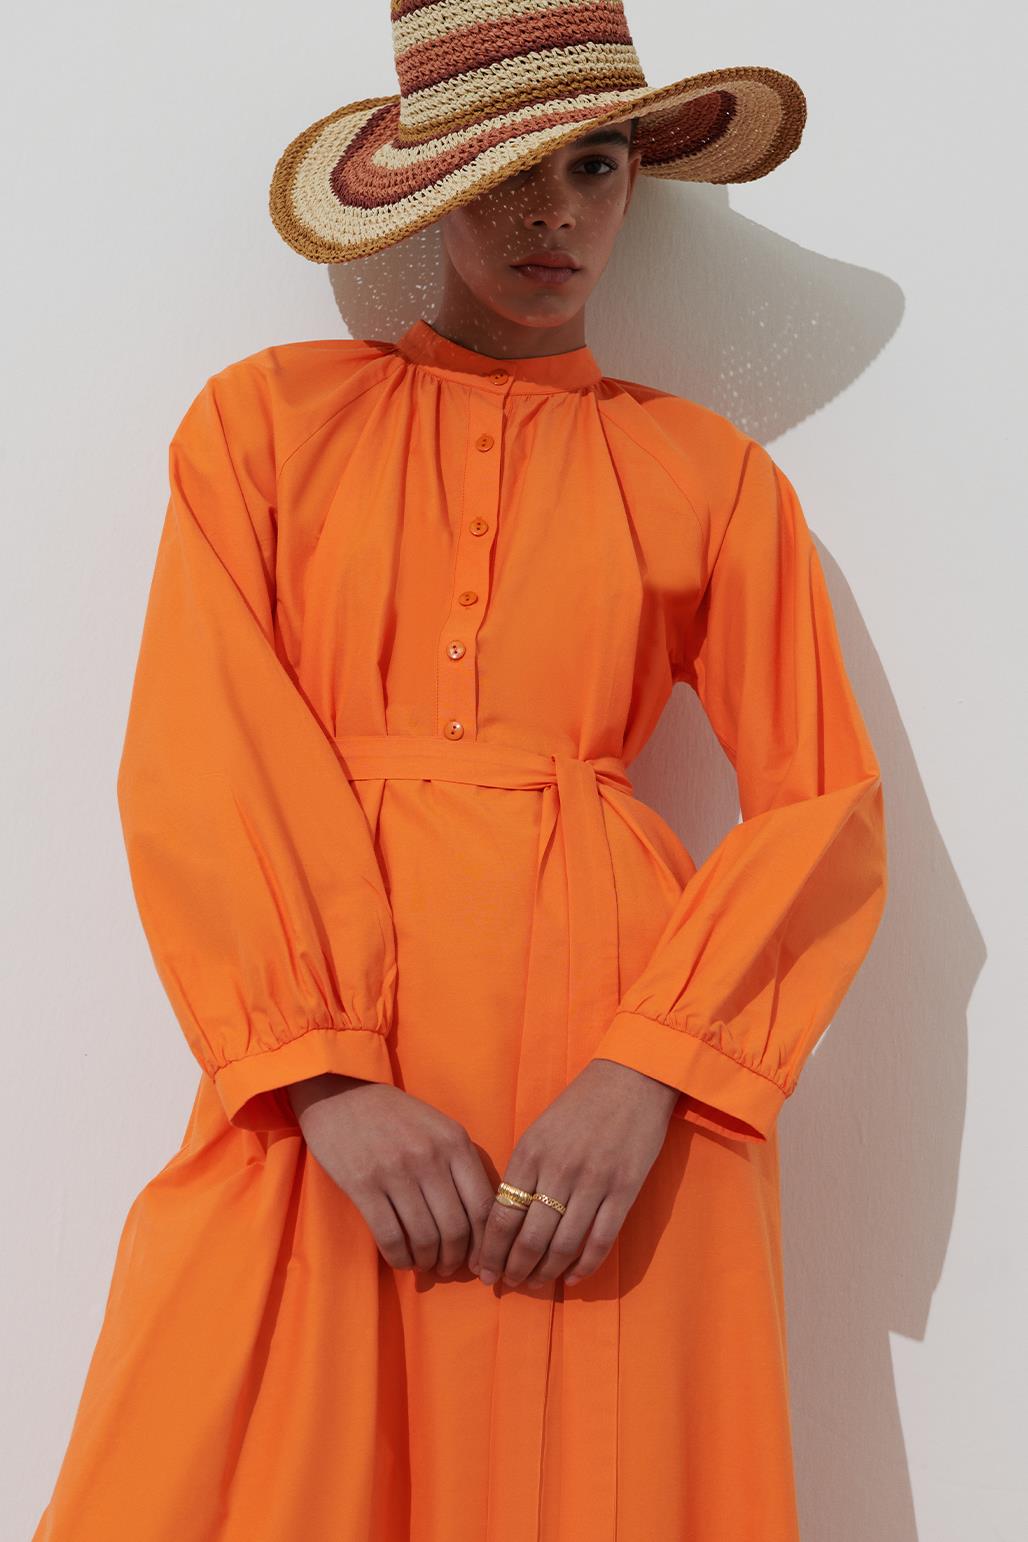 Matching Belted Dress Orange